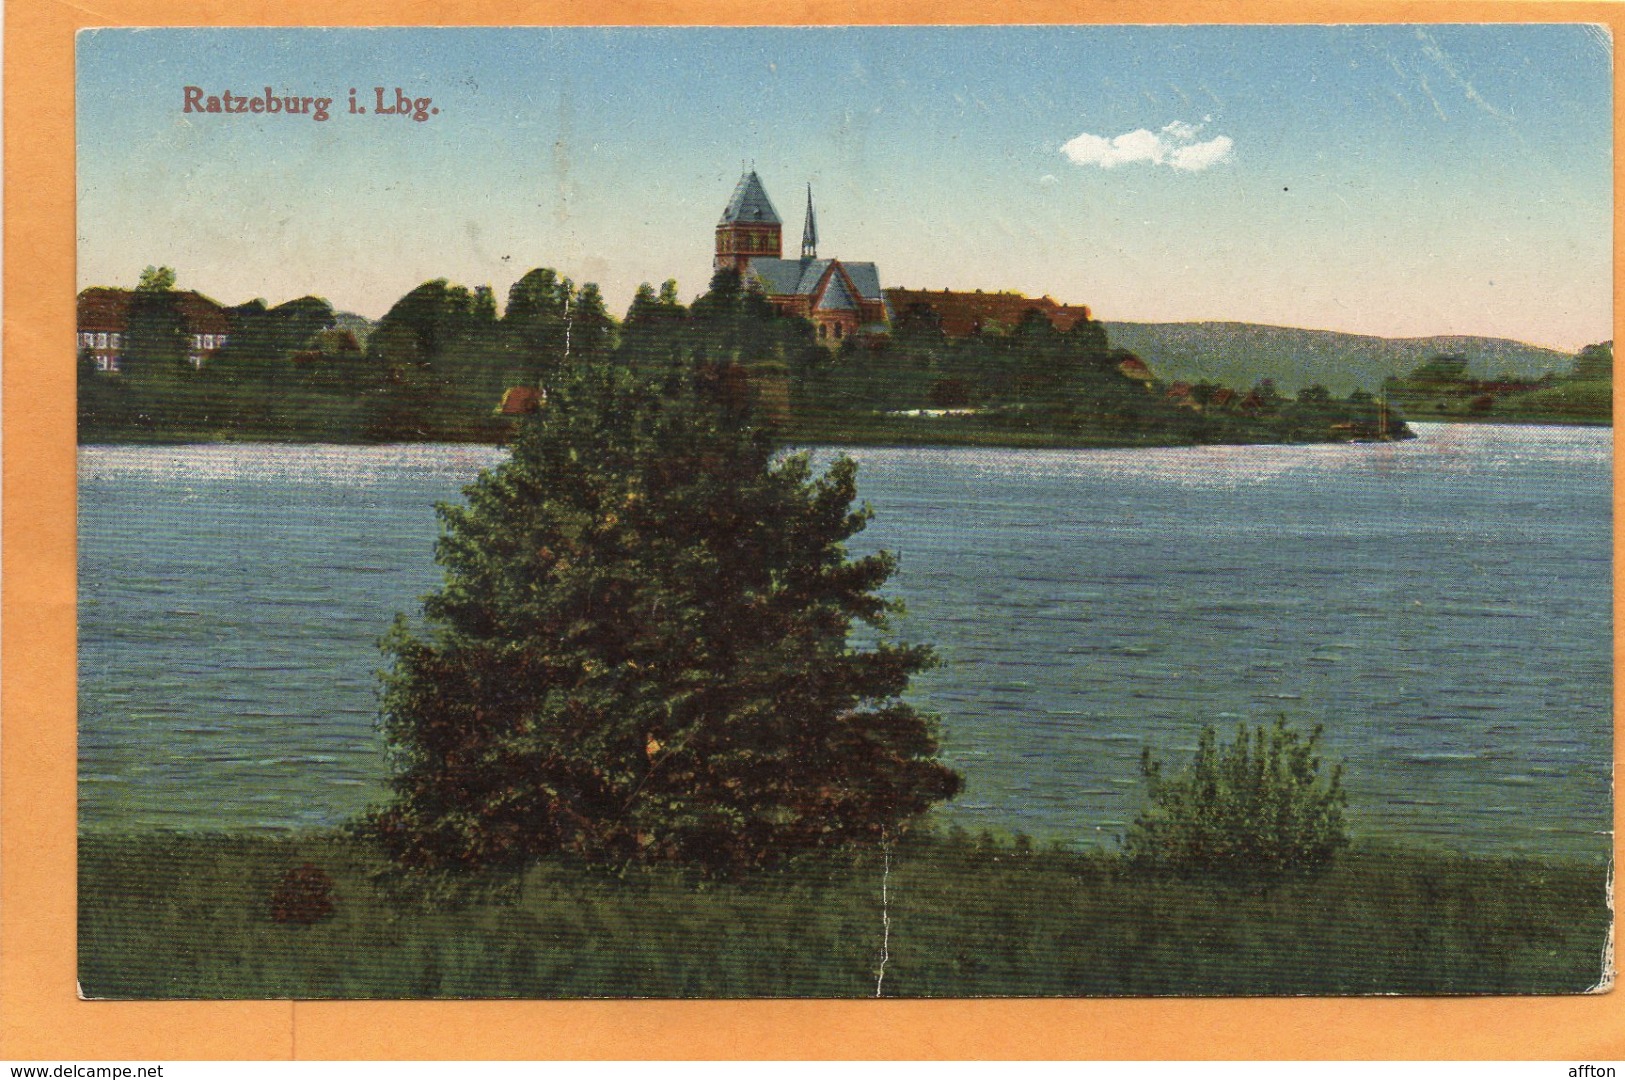 Ratzeburg 1922 Postcard - Ratzeburg